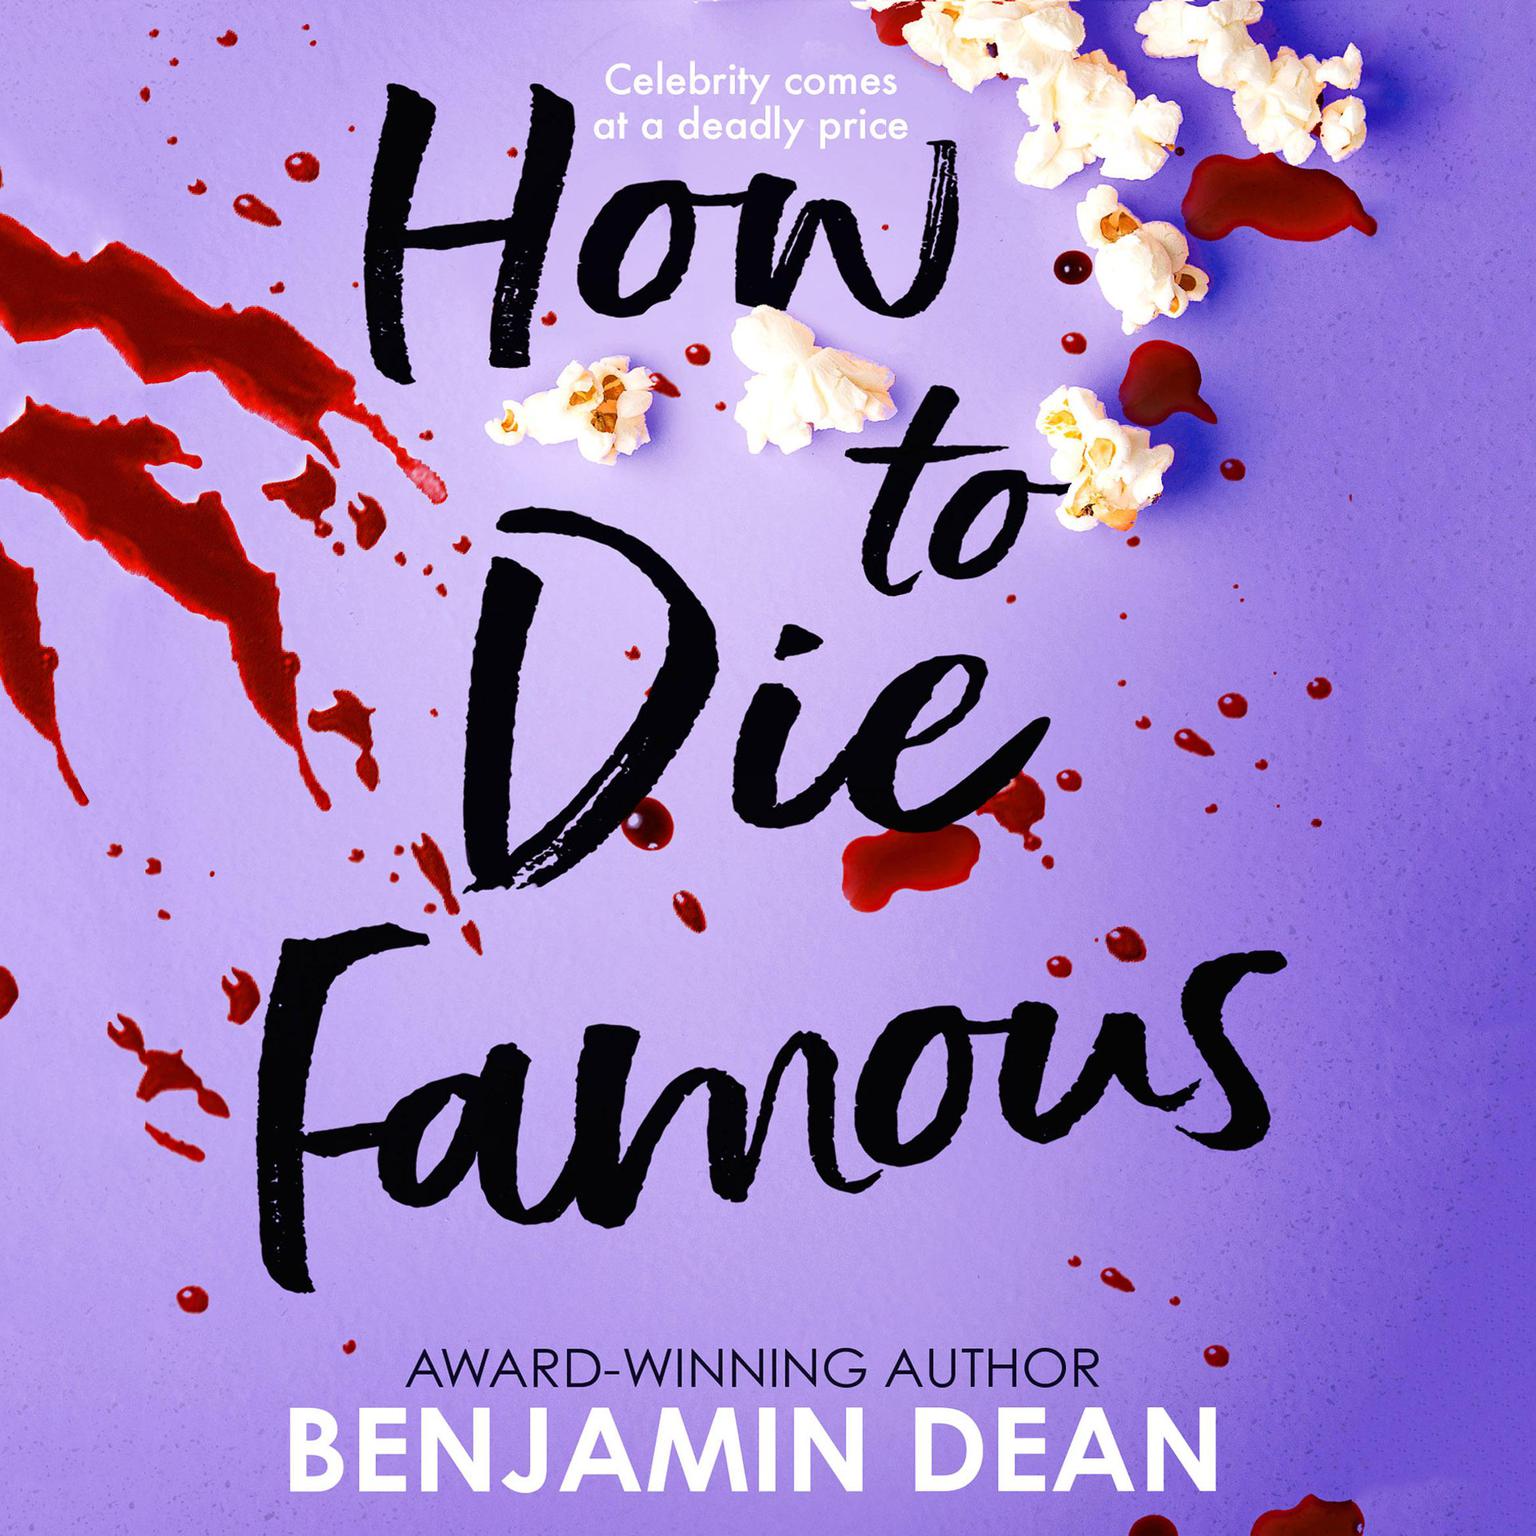 How To Die Famous Audiobook, by Benjamin Dean